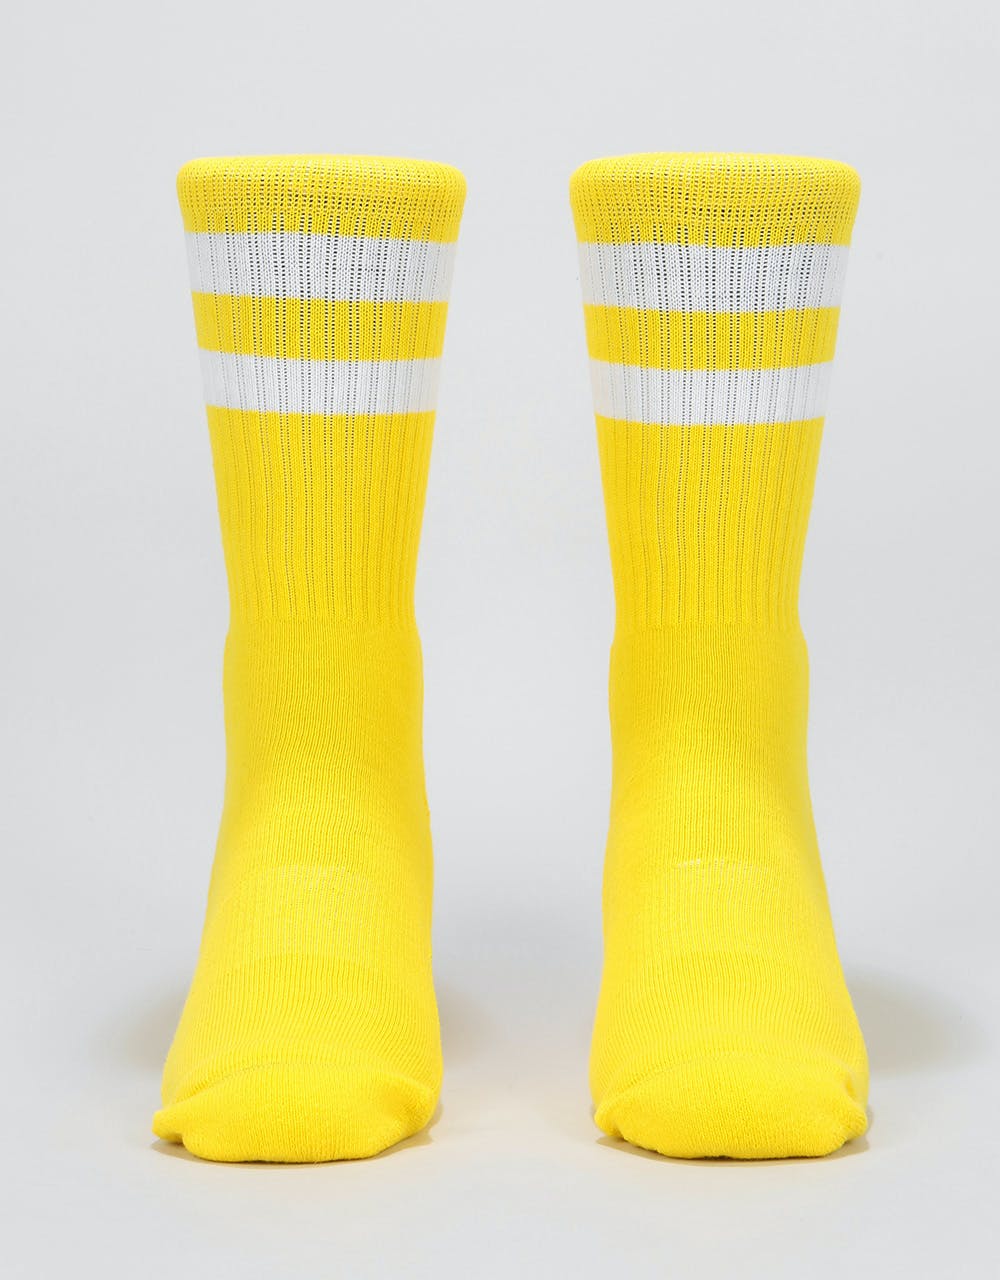 Route One Classic Crew Socks - Mustard/White